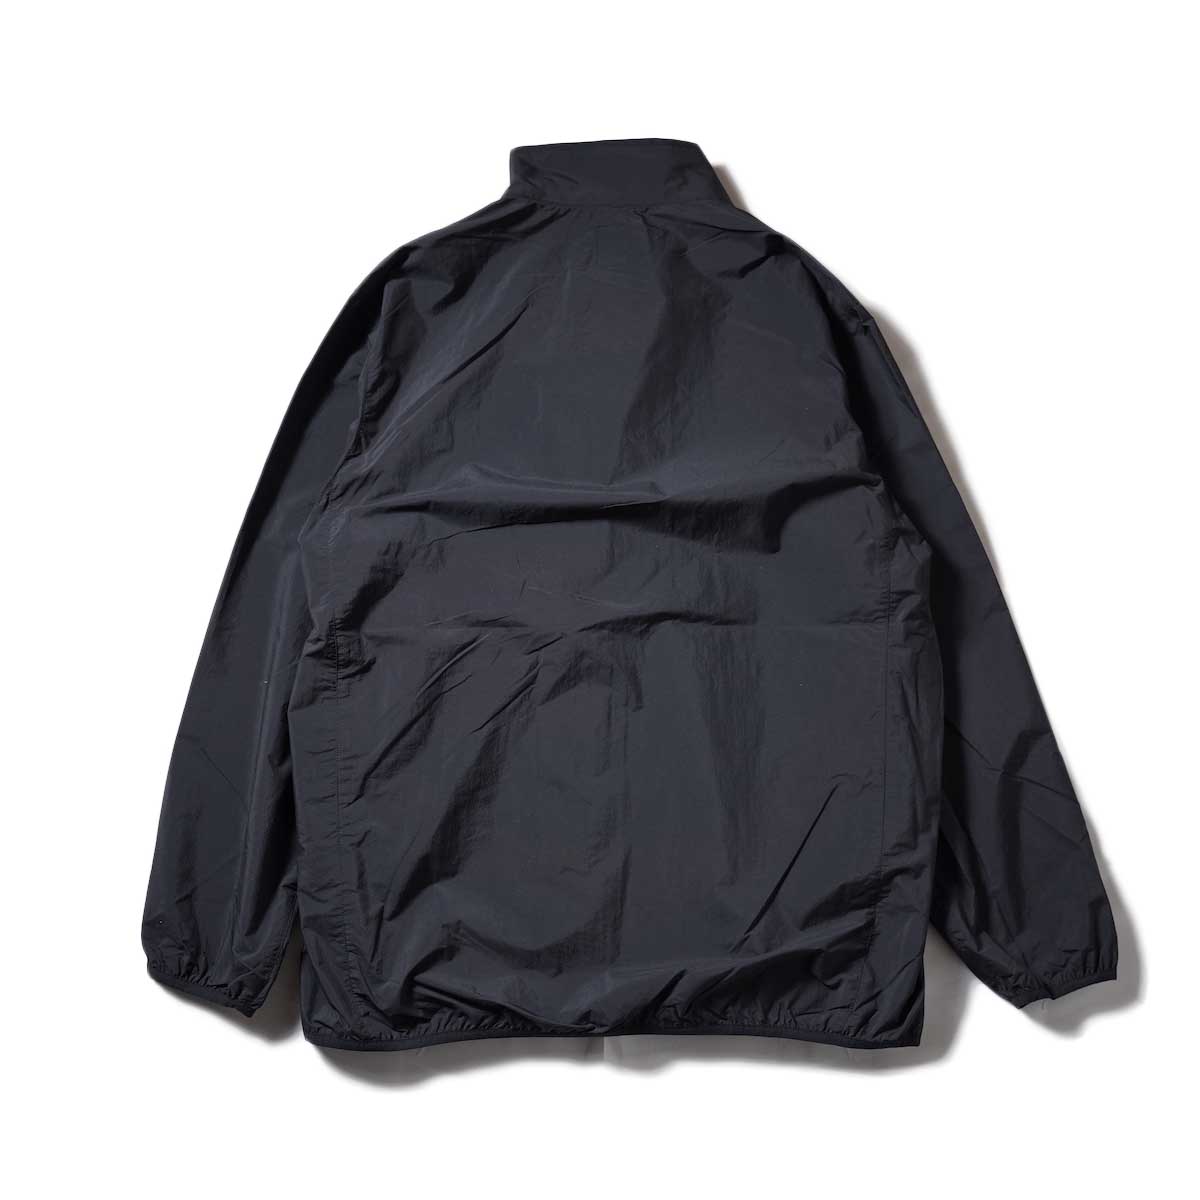 South2 West8 / Packable Jacket (Black)背面